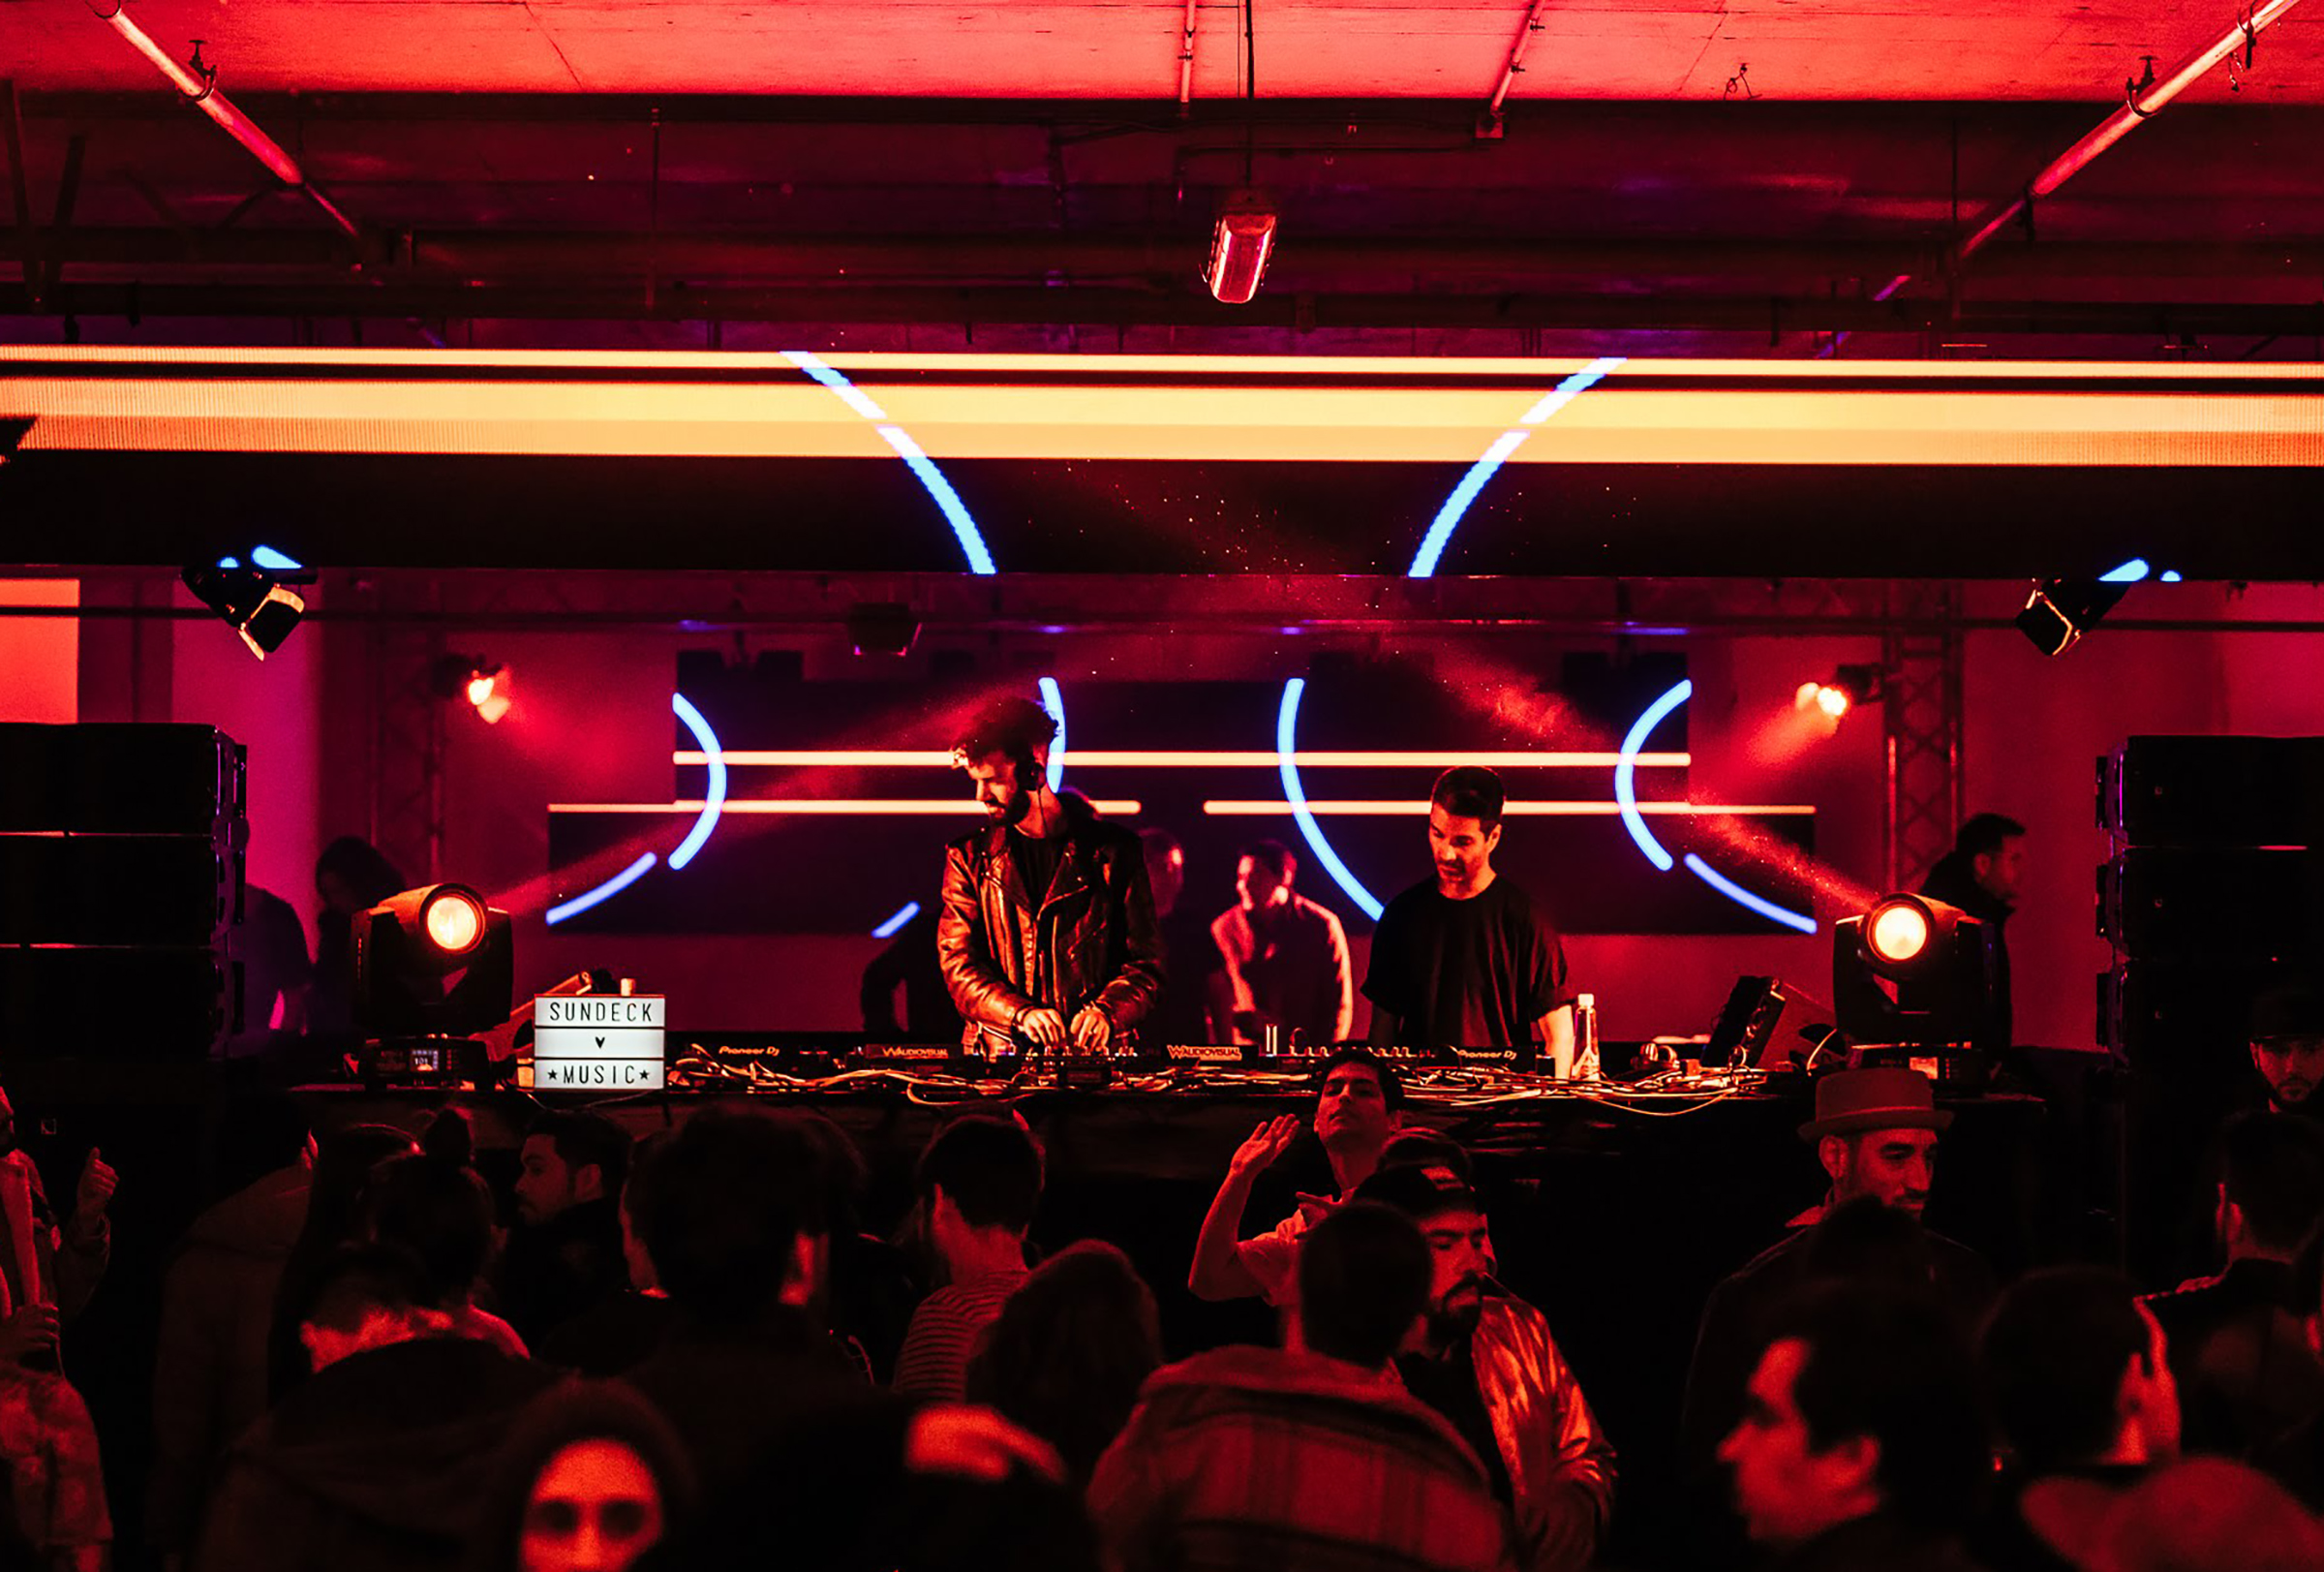 Benjamin Alexander DJ'ing at Sundeck. 2018, Santiago, Chile.